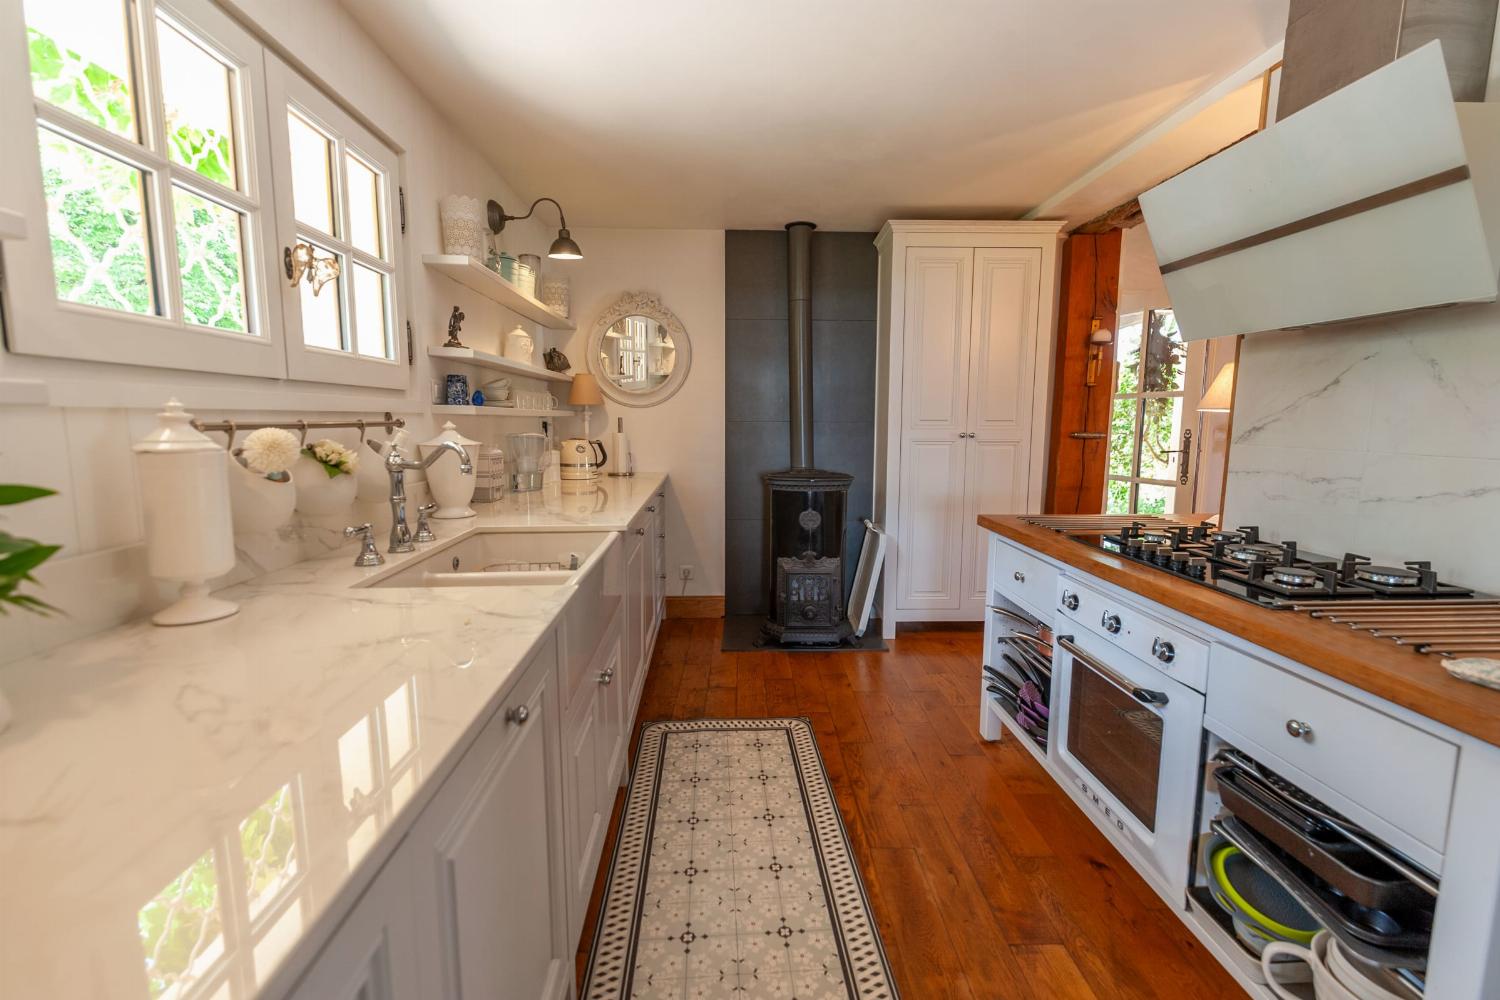 Kitchen | Rental home in Lot-et-Garonne